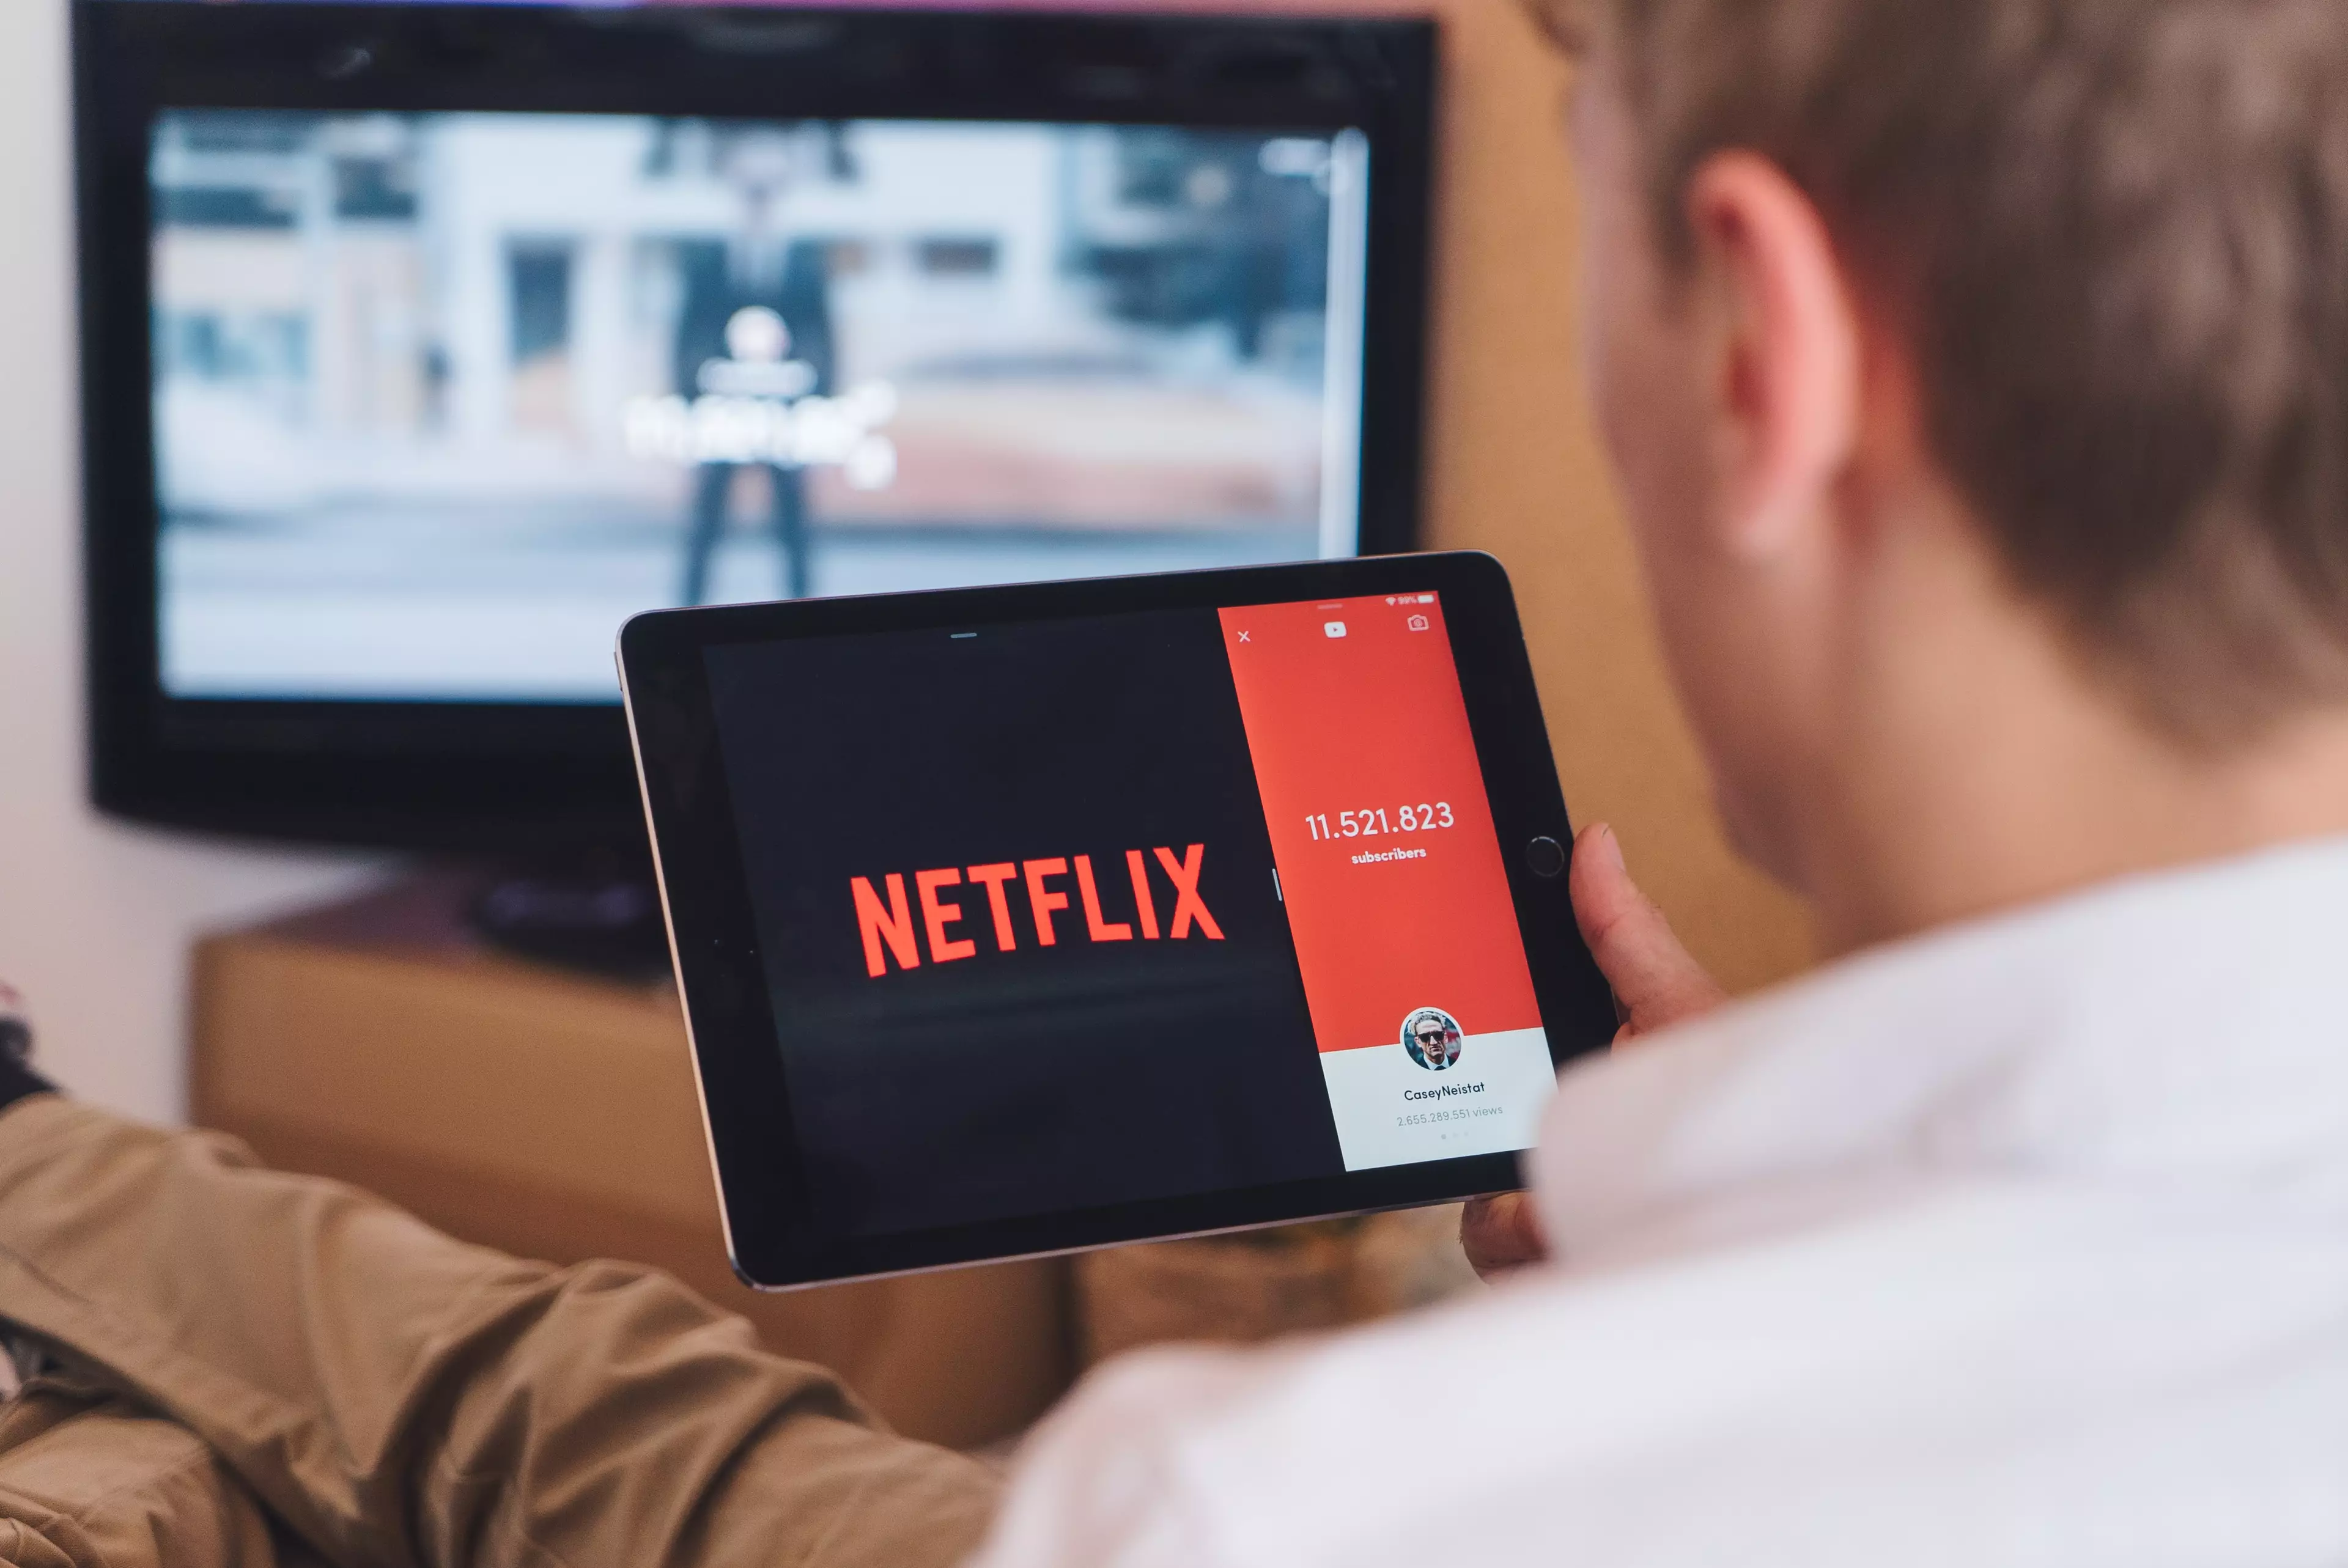 Netflix hasn't yet unveiled any concrete plans (